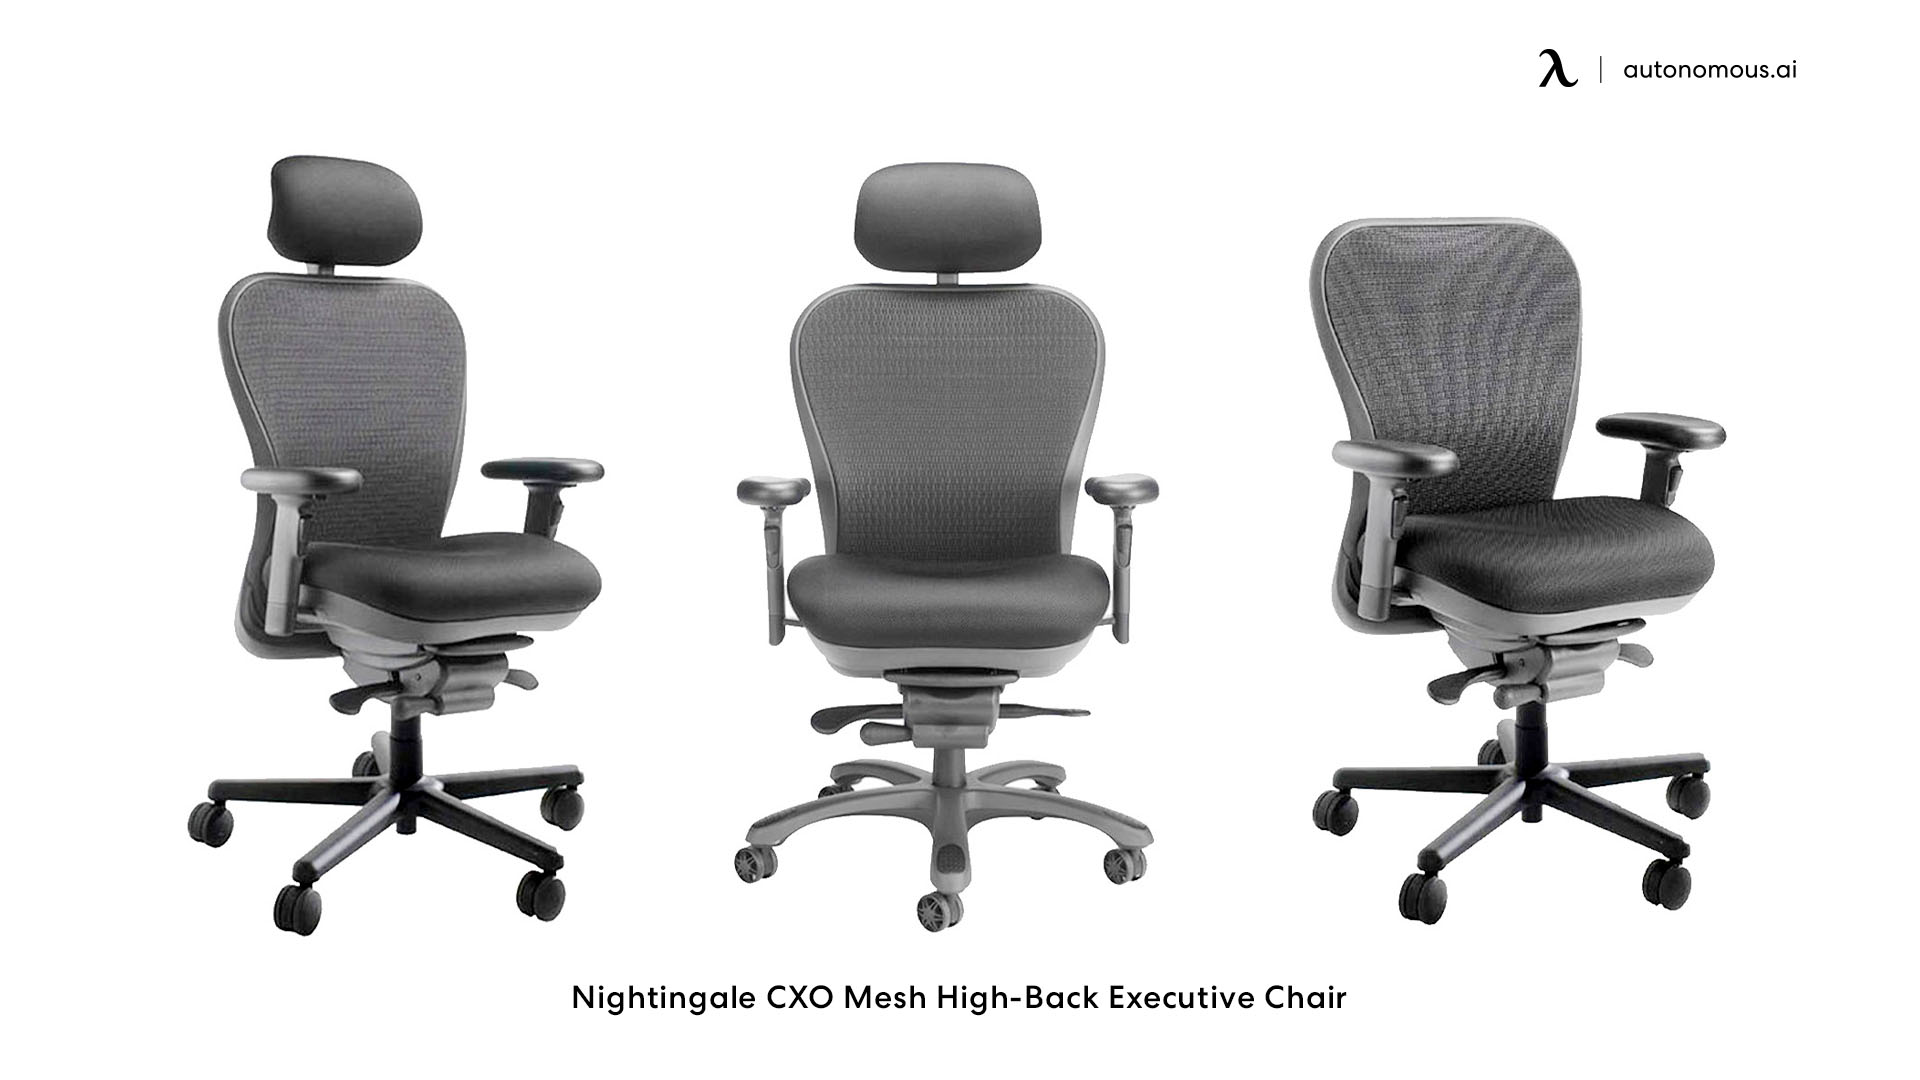 Nightingale CXO large office chair